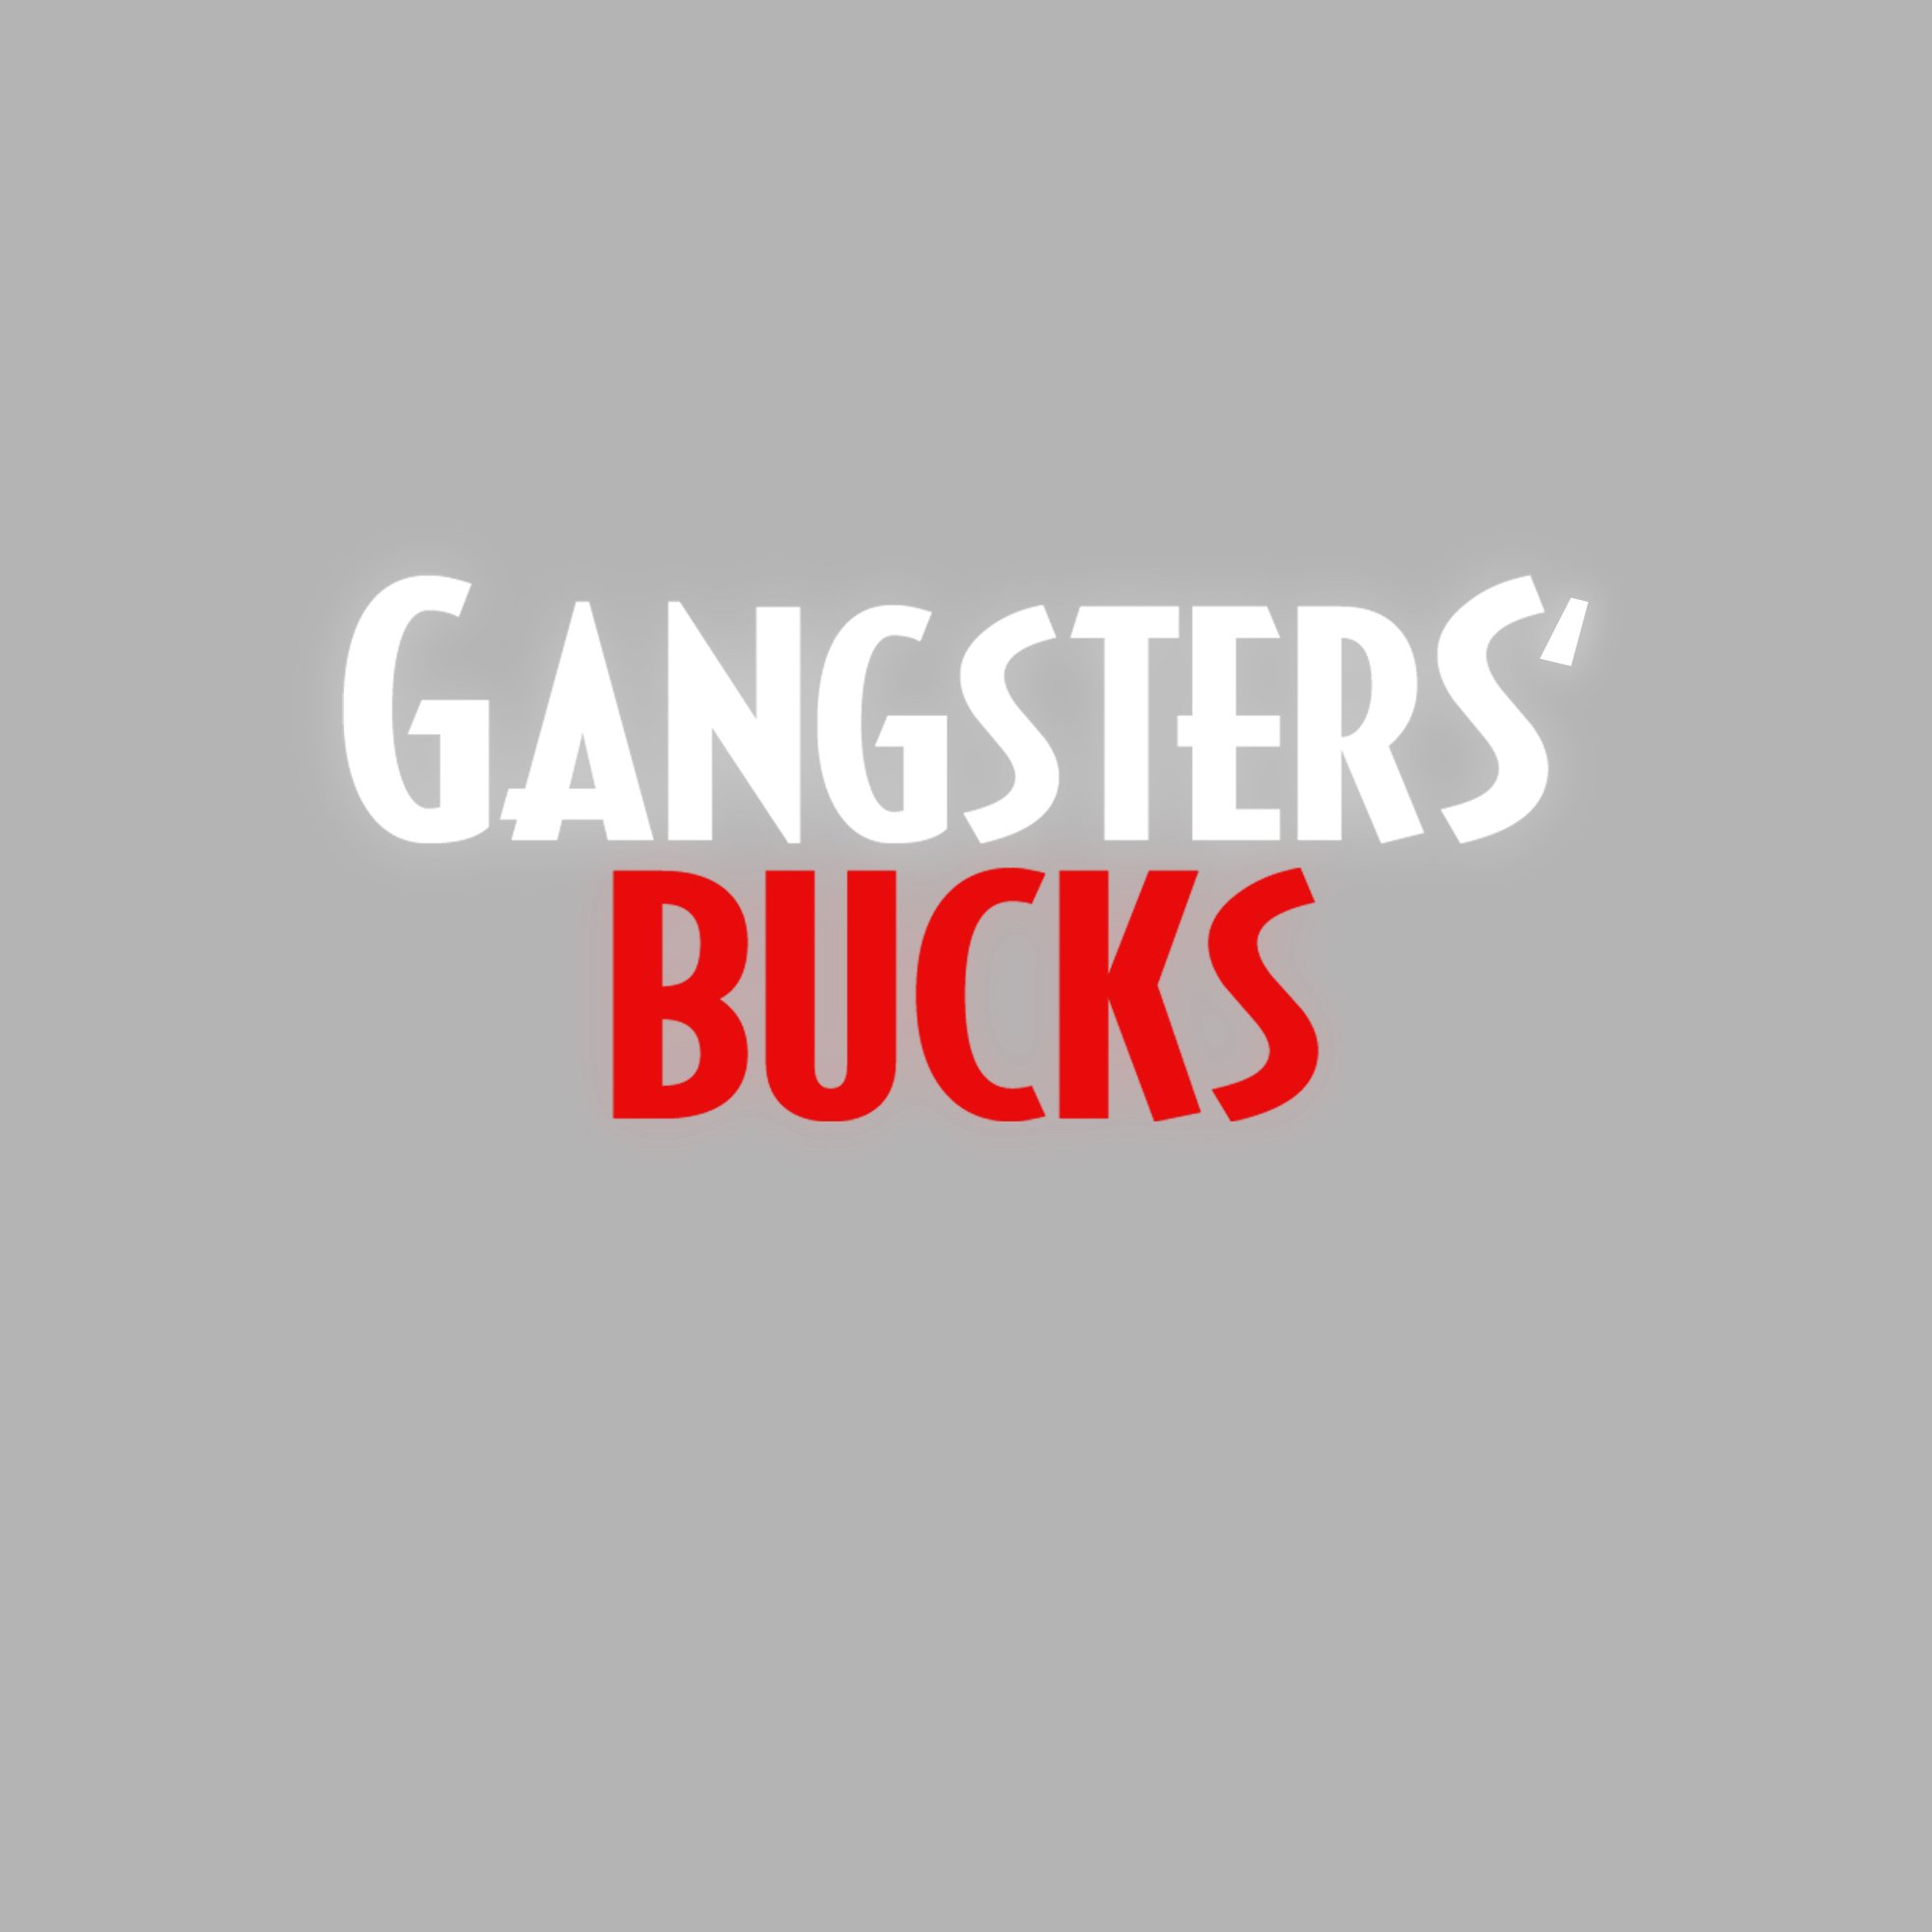  GANGSTERS' BUCKS